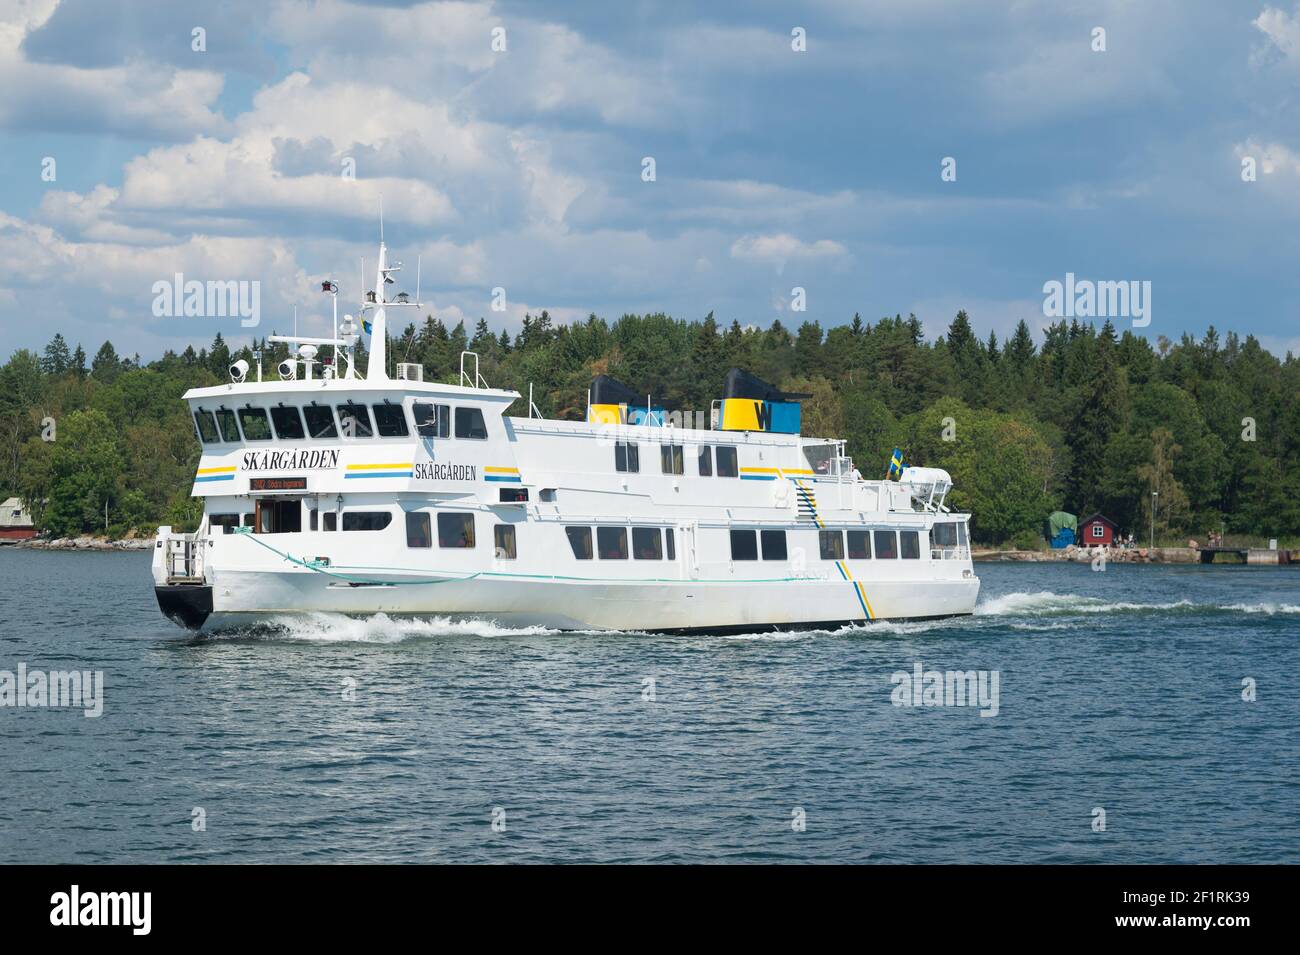 Skärgården ferry in Stockholm Archipelago, Sweden. Stock Photo